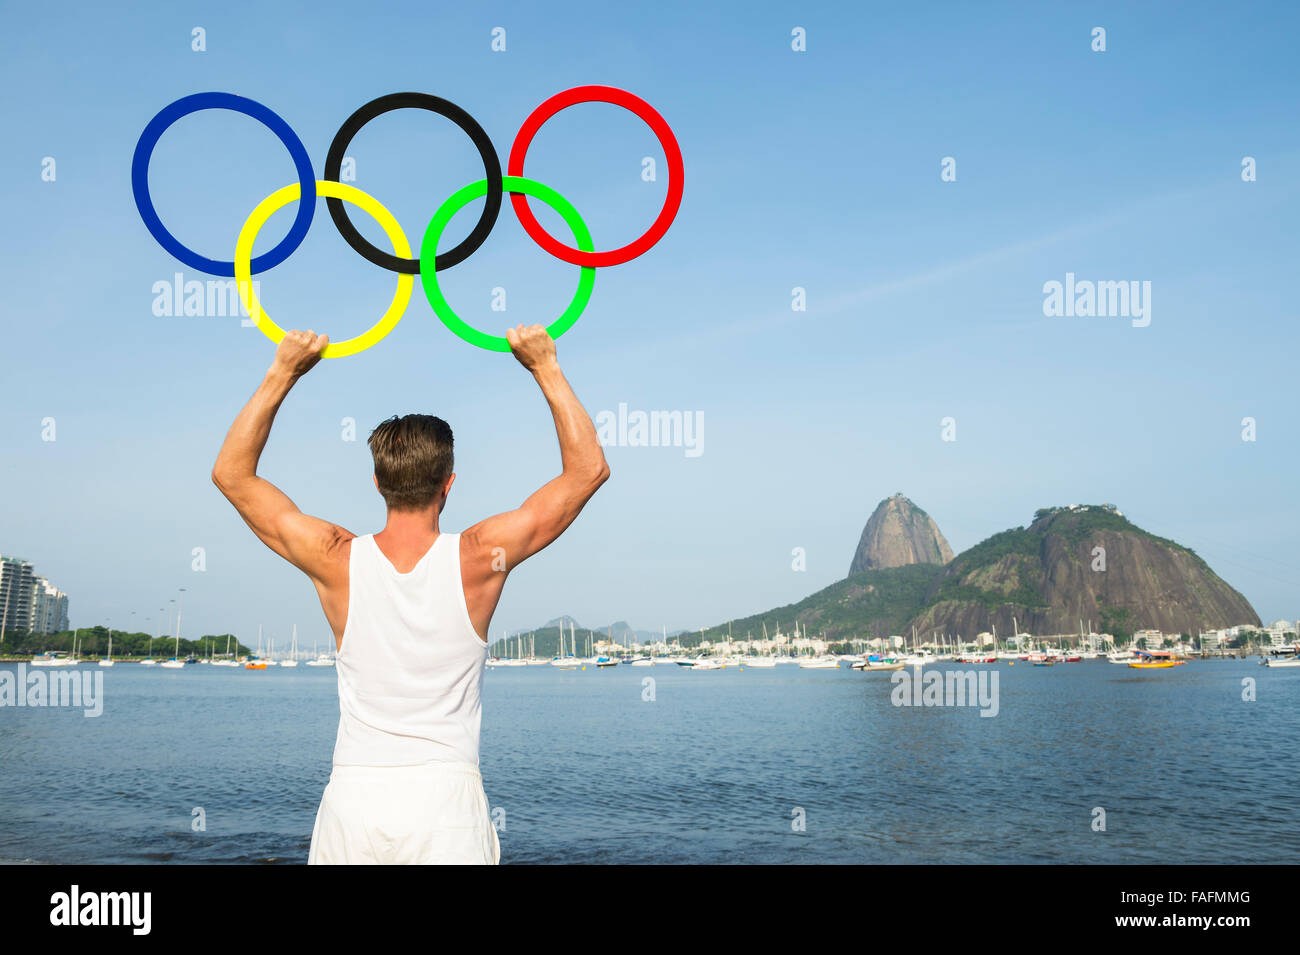 RIO DE JANEIRO, BRAZIL - NOVEMBER 10, 2015: Athlete holds Olympic rings near Sugarloaf Mountain on the shore of Botafogo Beach. Stock Photo